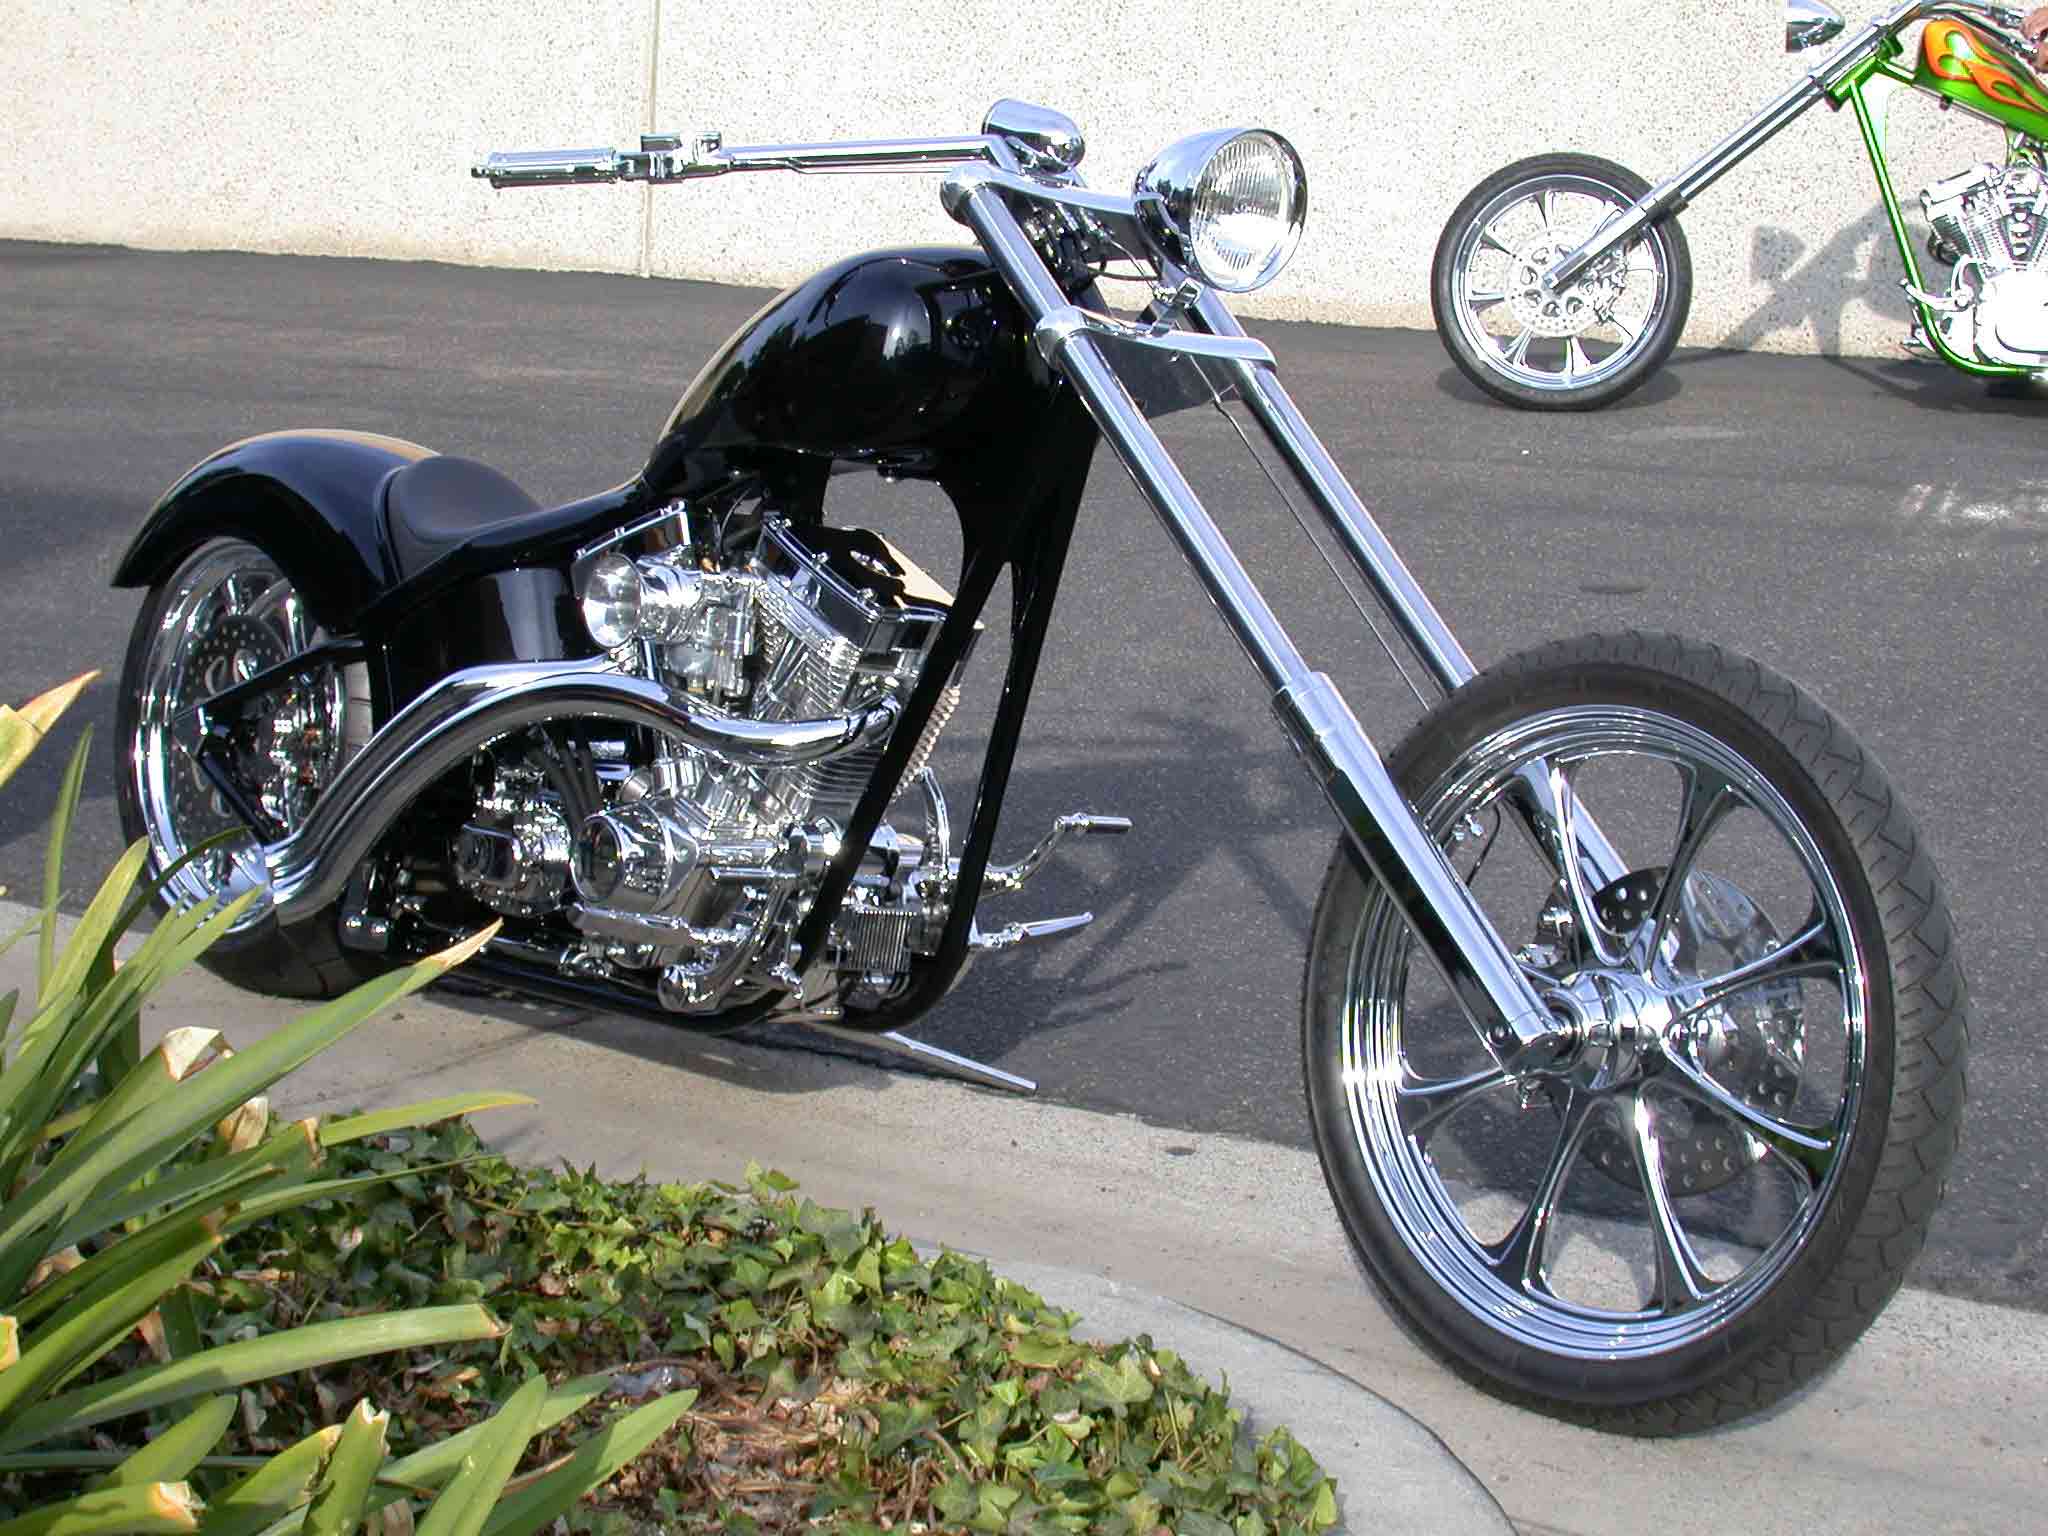 Gallery, custom chopper for sale, custom motorcycle for